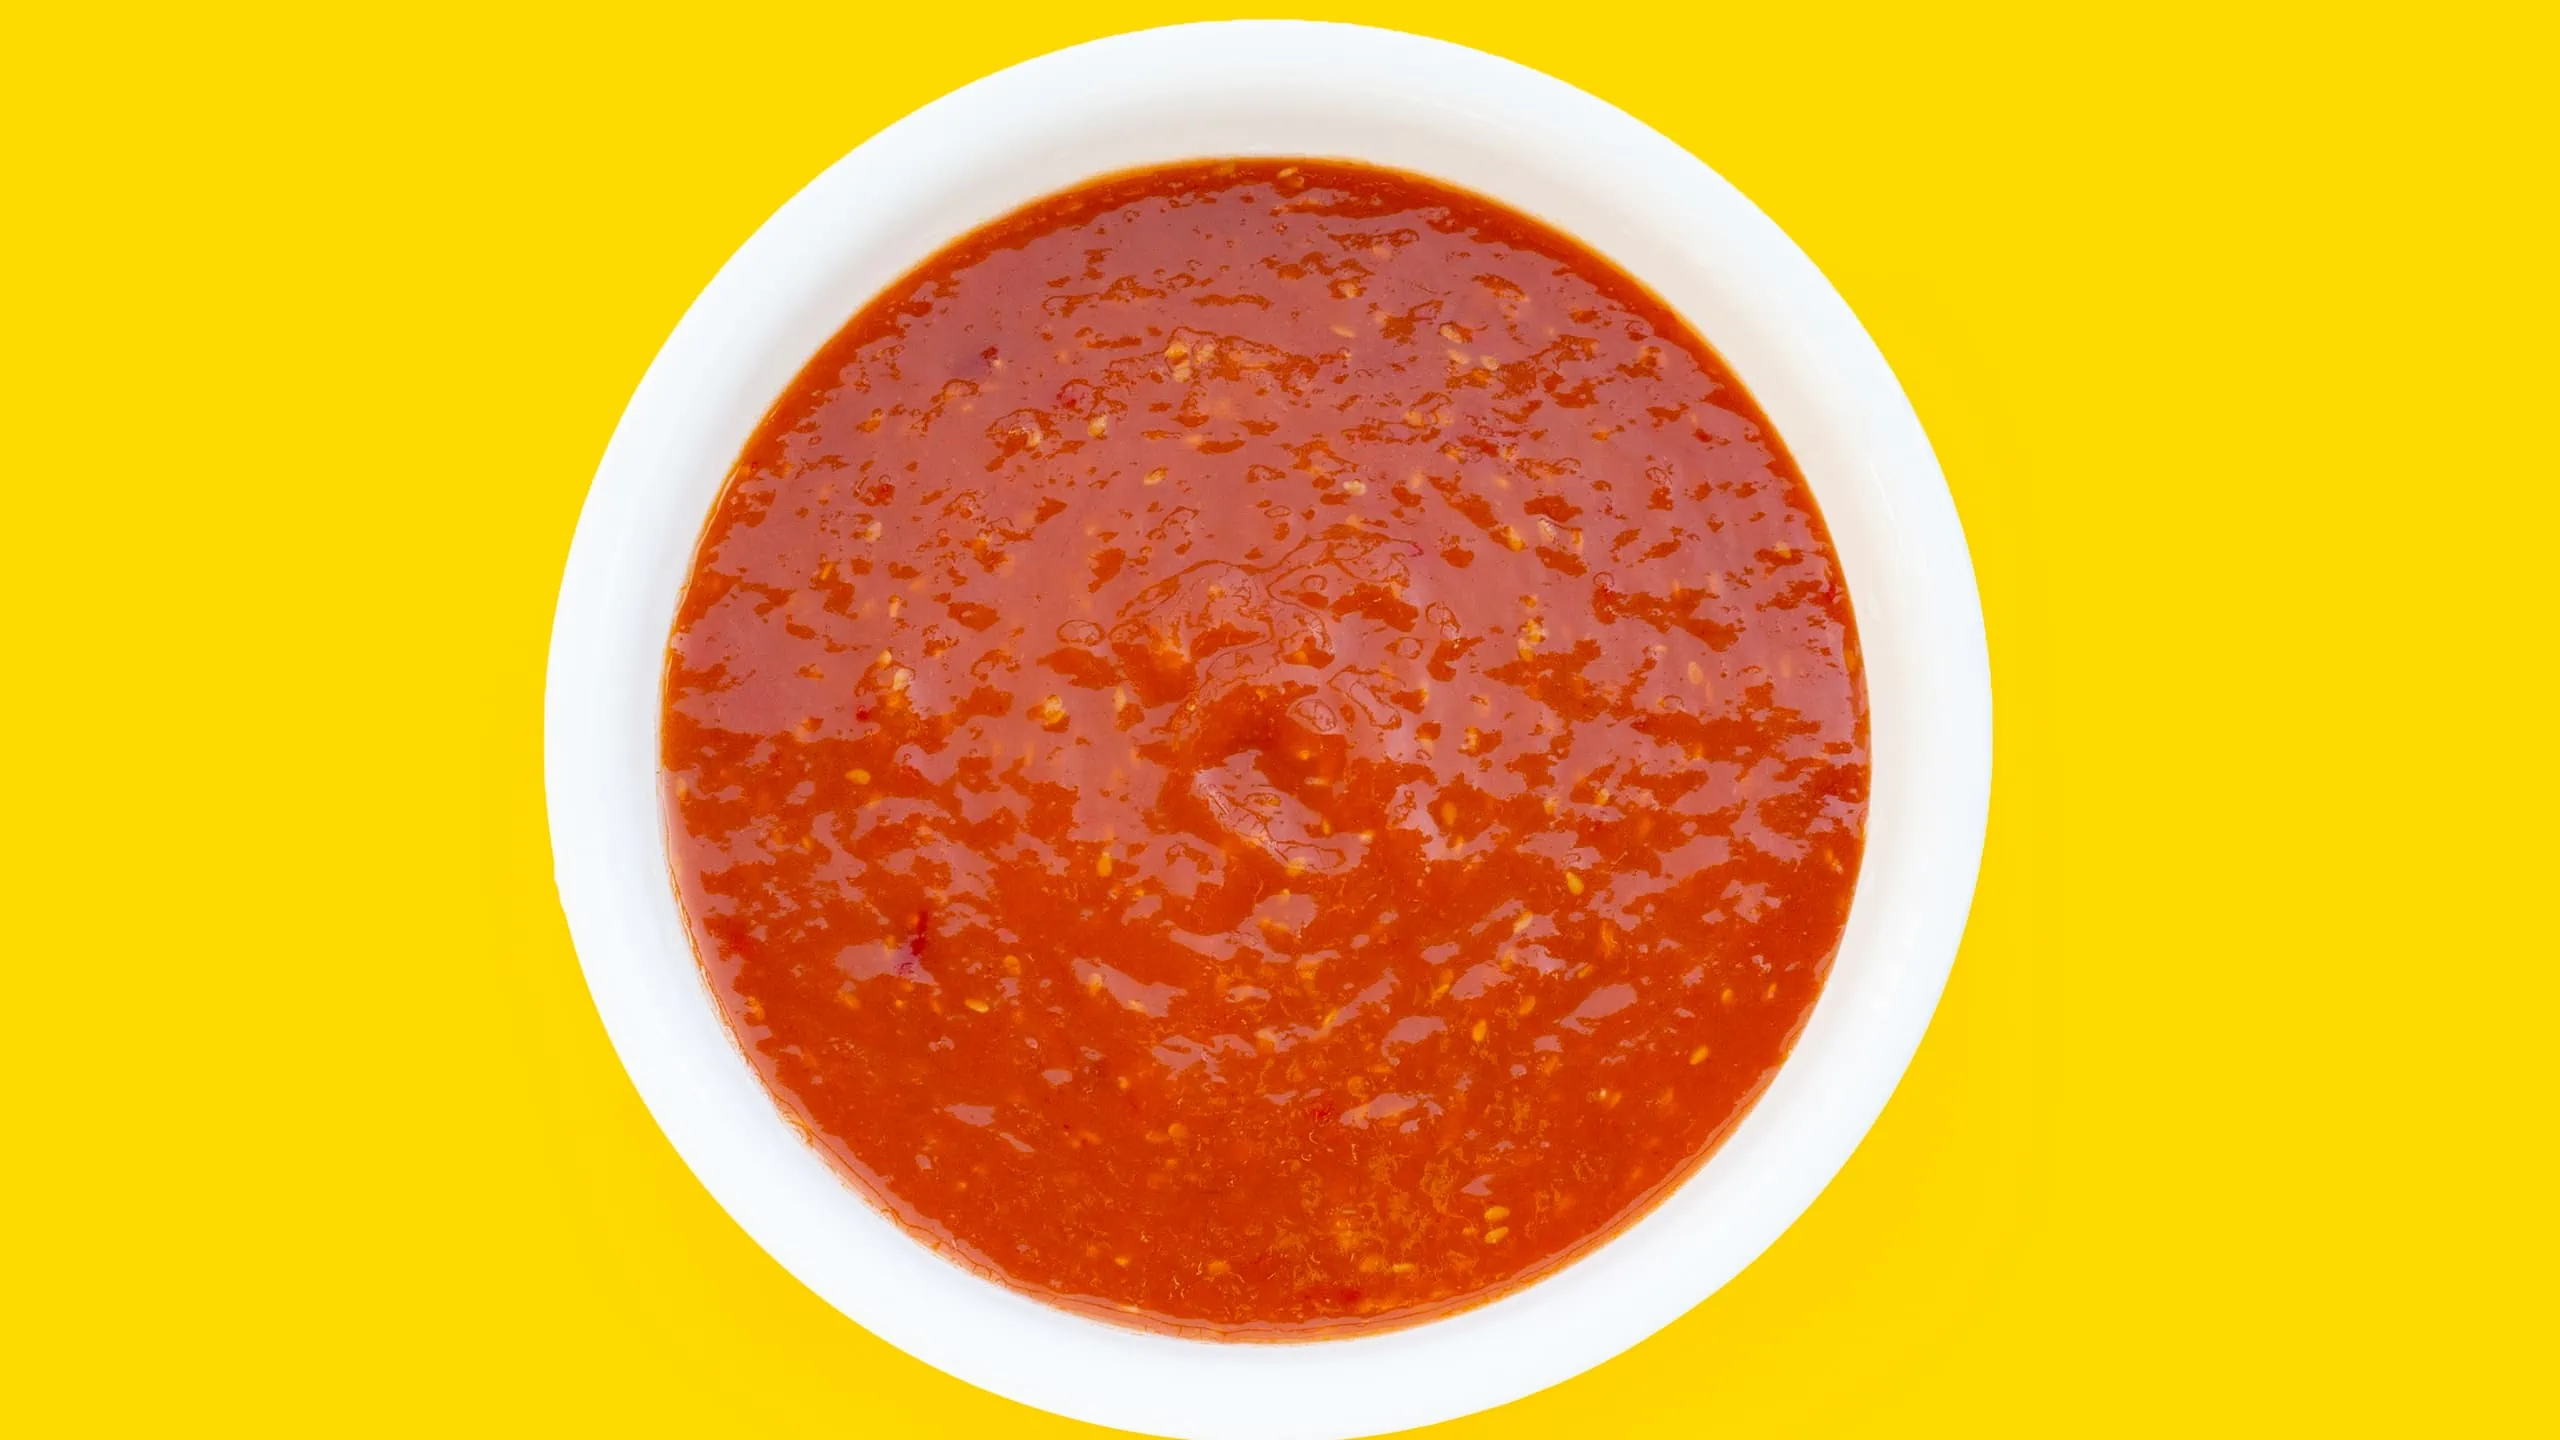 Our version of Carolina Reaper hot sauce recipe